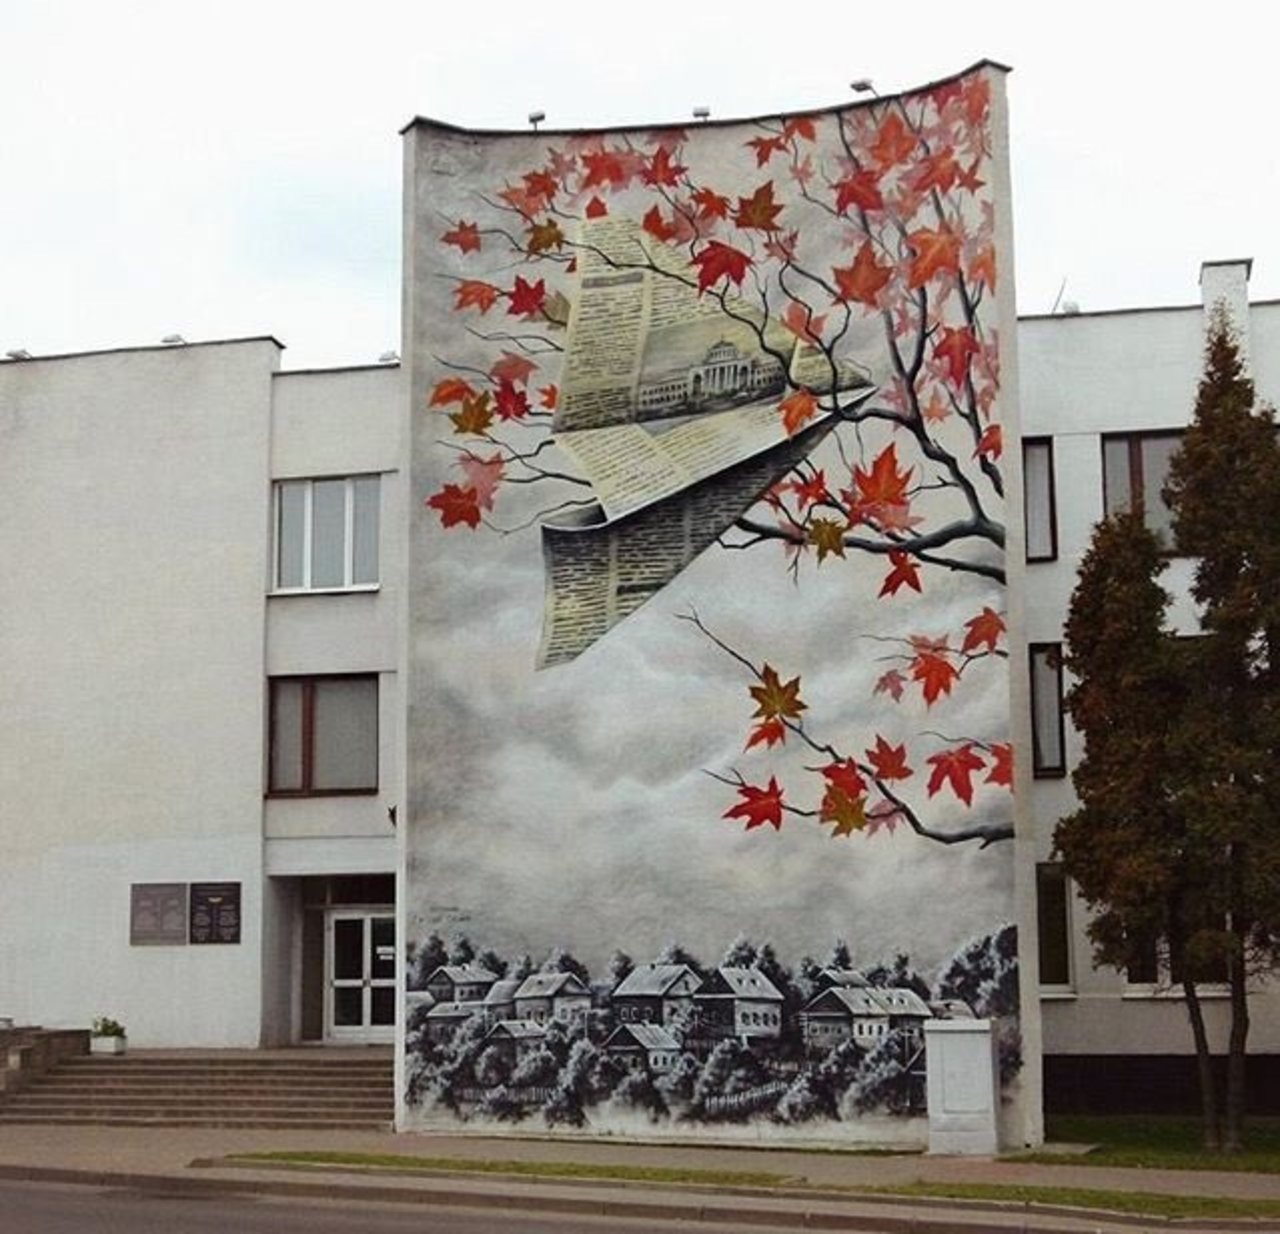 RT @GoogleStreetArt 

New Street Art by MUTUS in Belarus

#art #graffiti #mural #streetart https://t.co/z7T5HOffoH